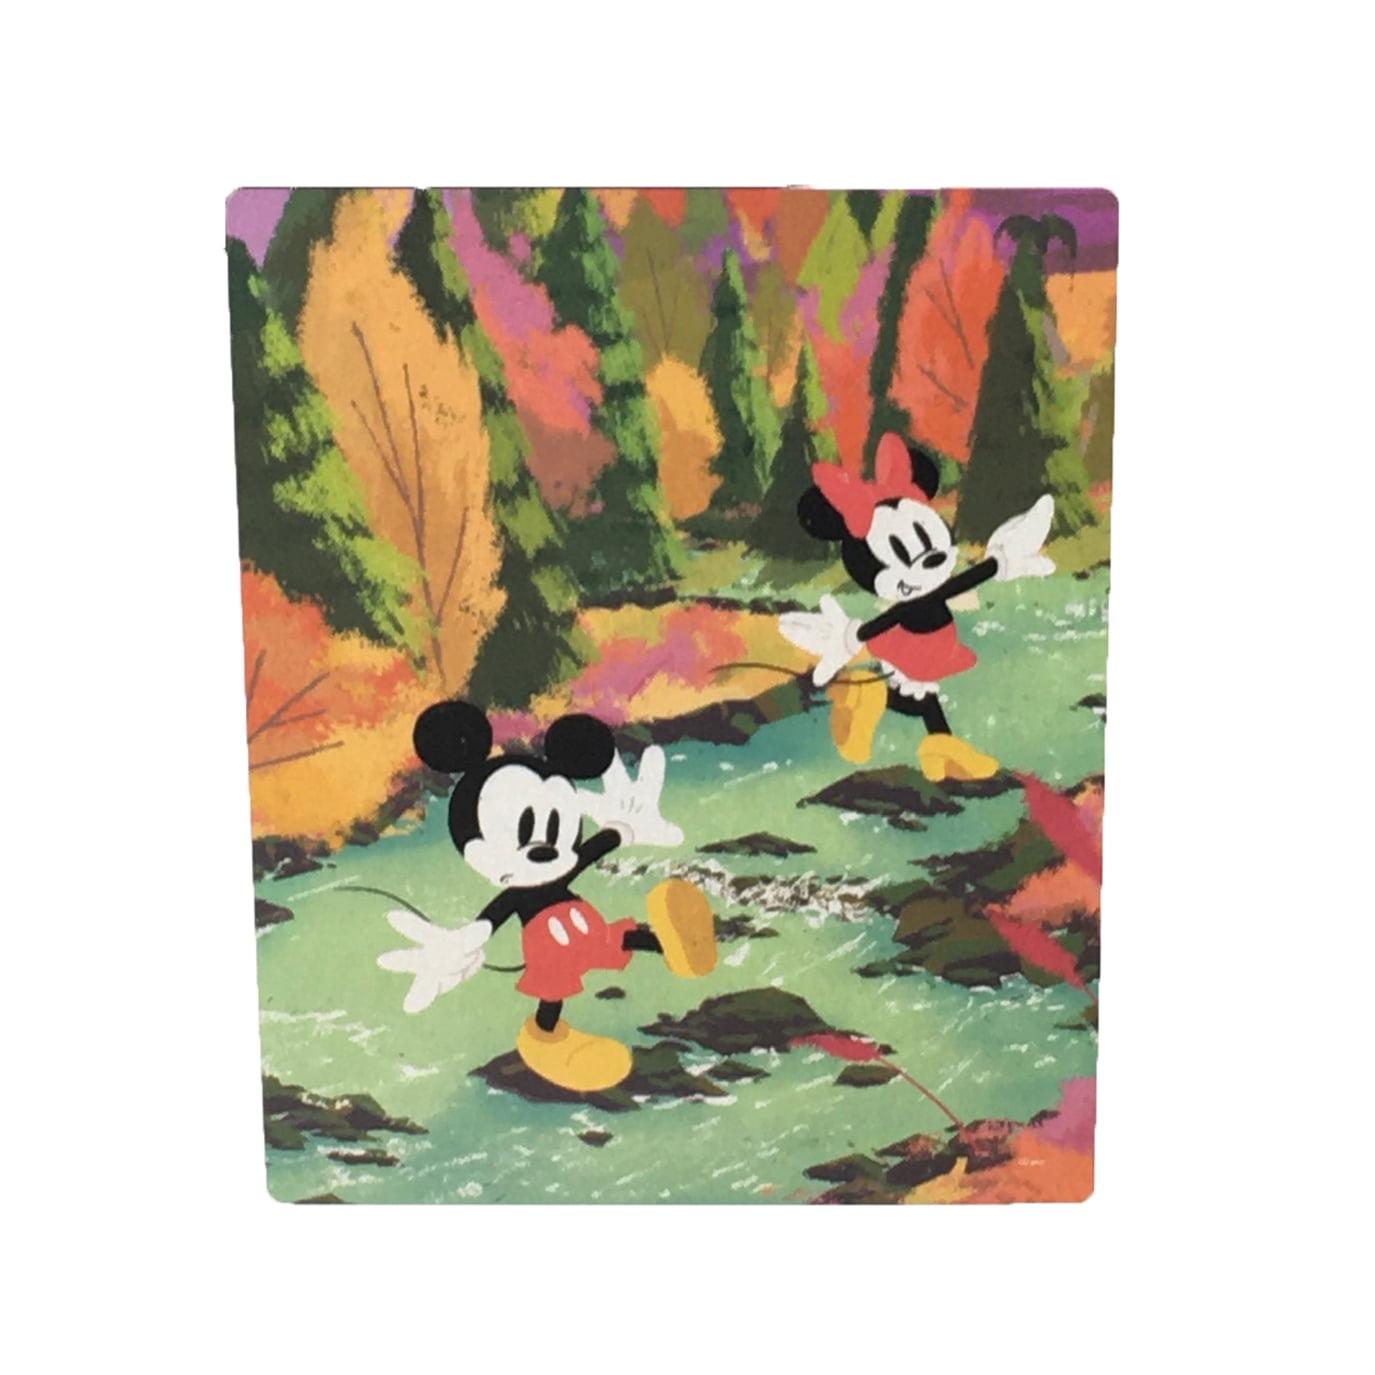 Tenyo Disney Mickey Dream Fantasy Glow in The Dark 500pc Jigsaw Puzzle 14x19 for sale online 